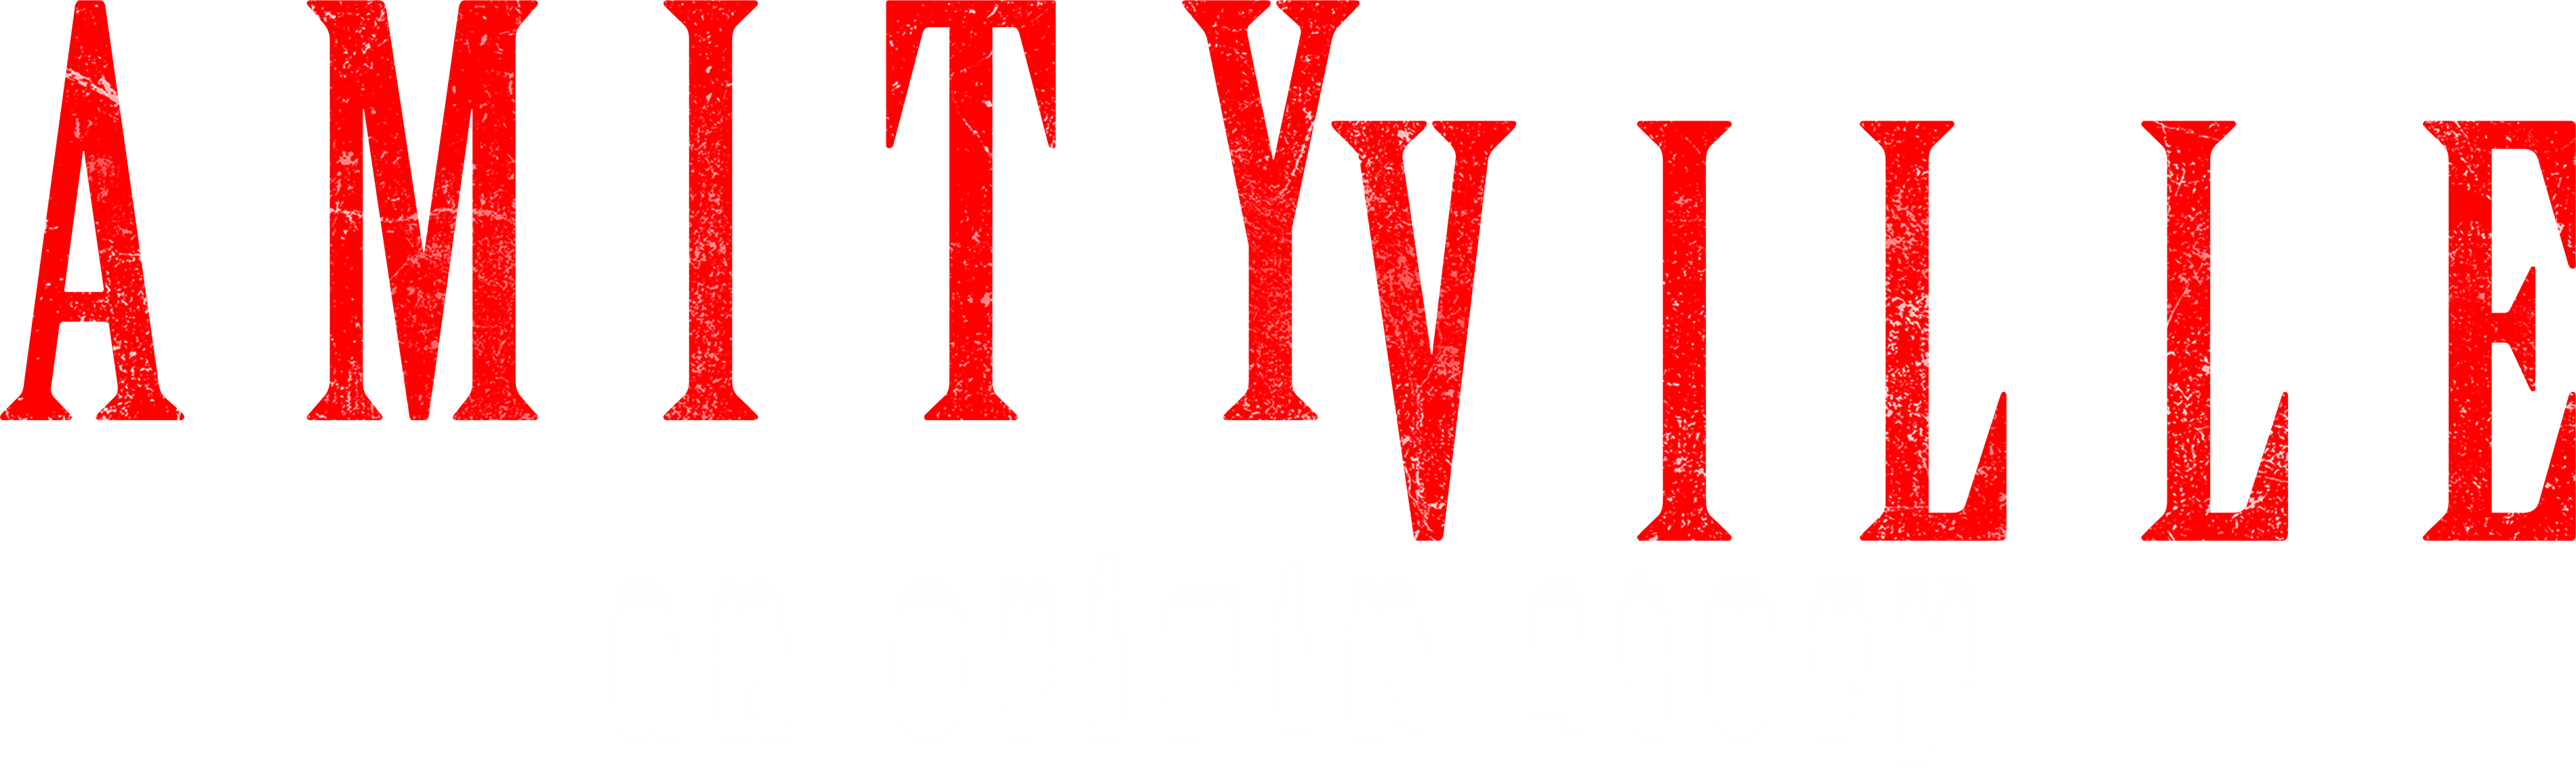 Amityville: An Origin Story logo